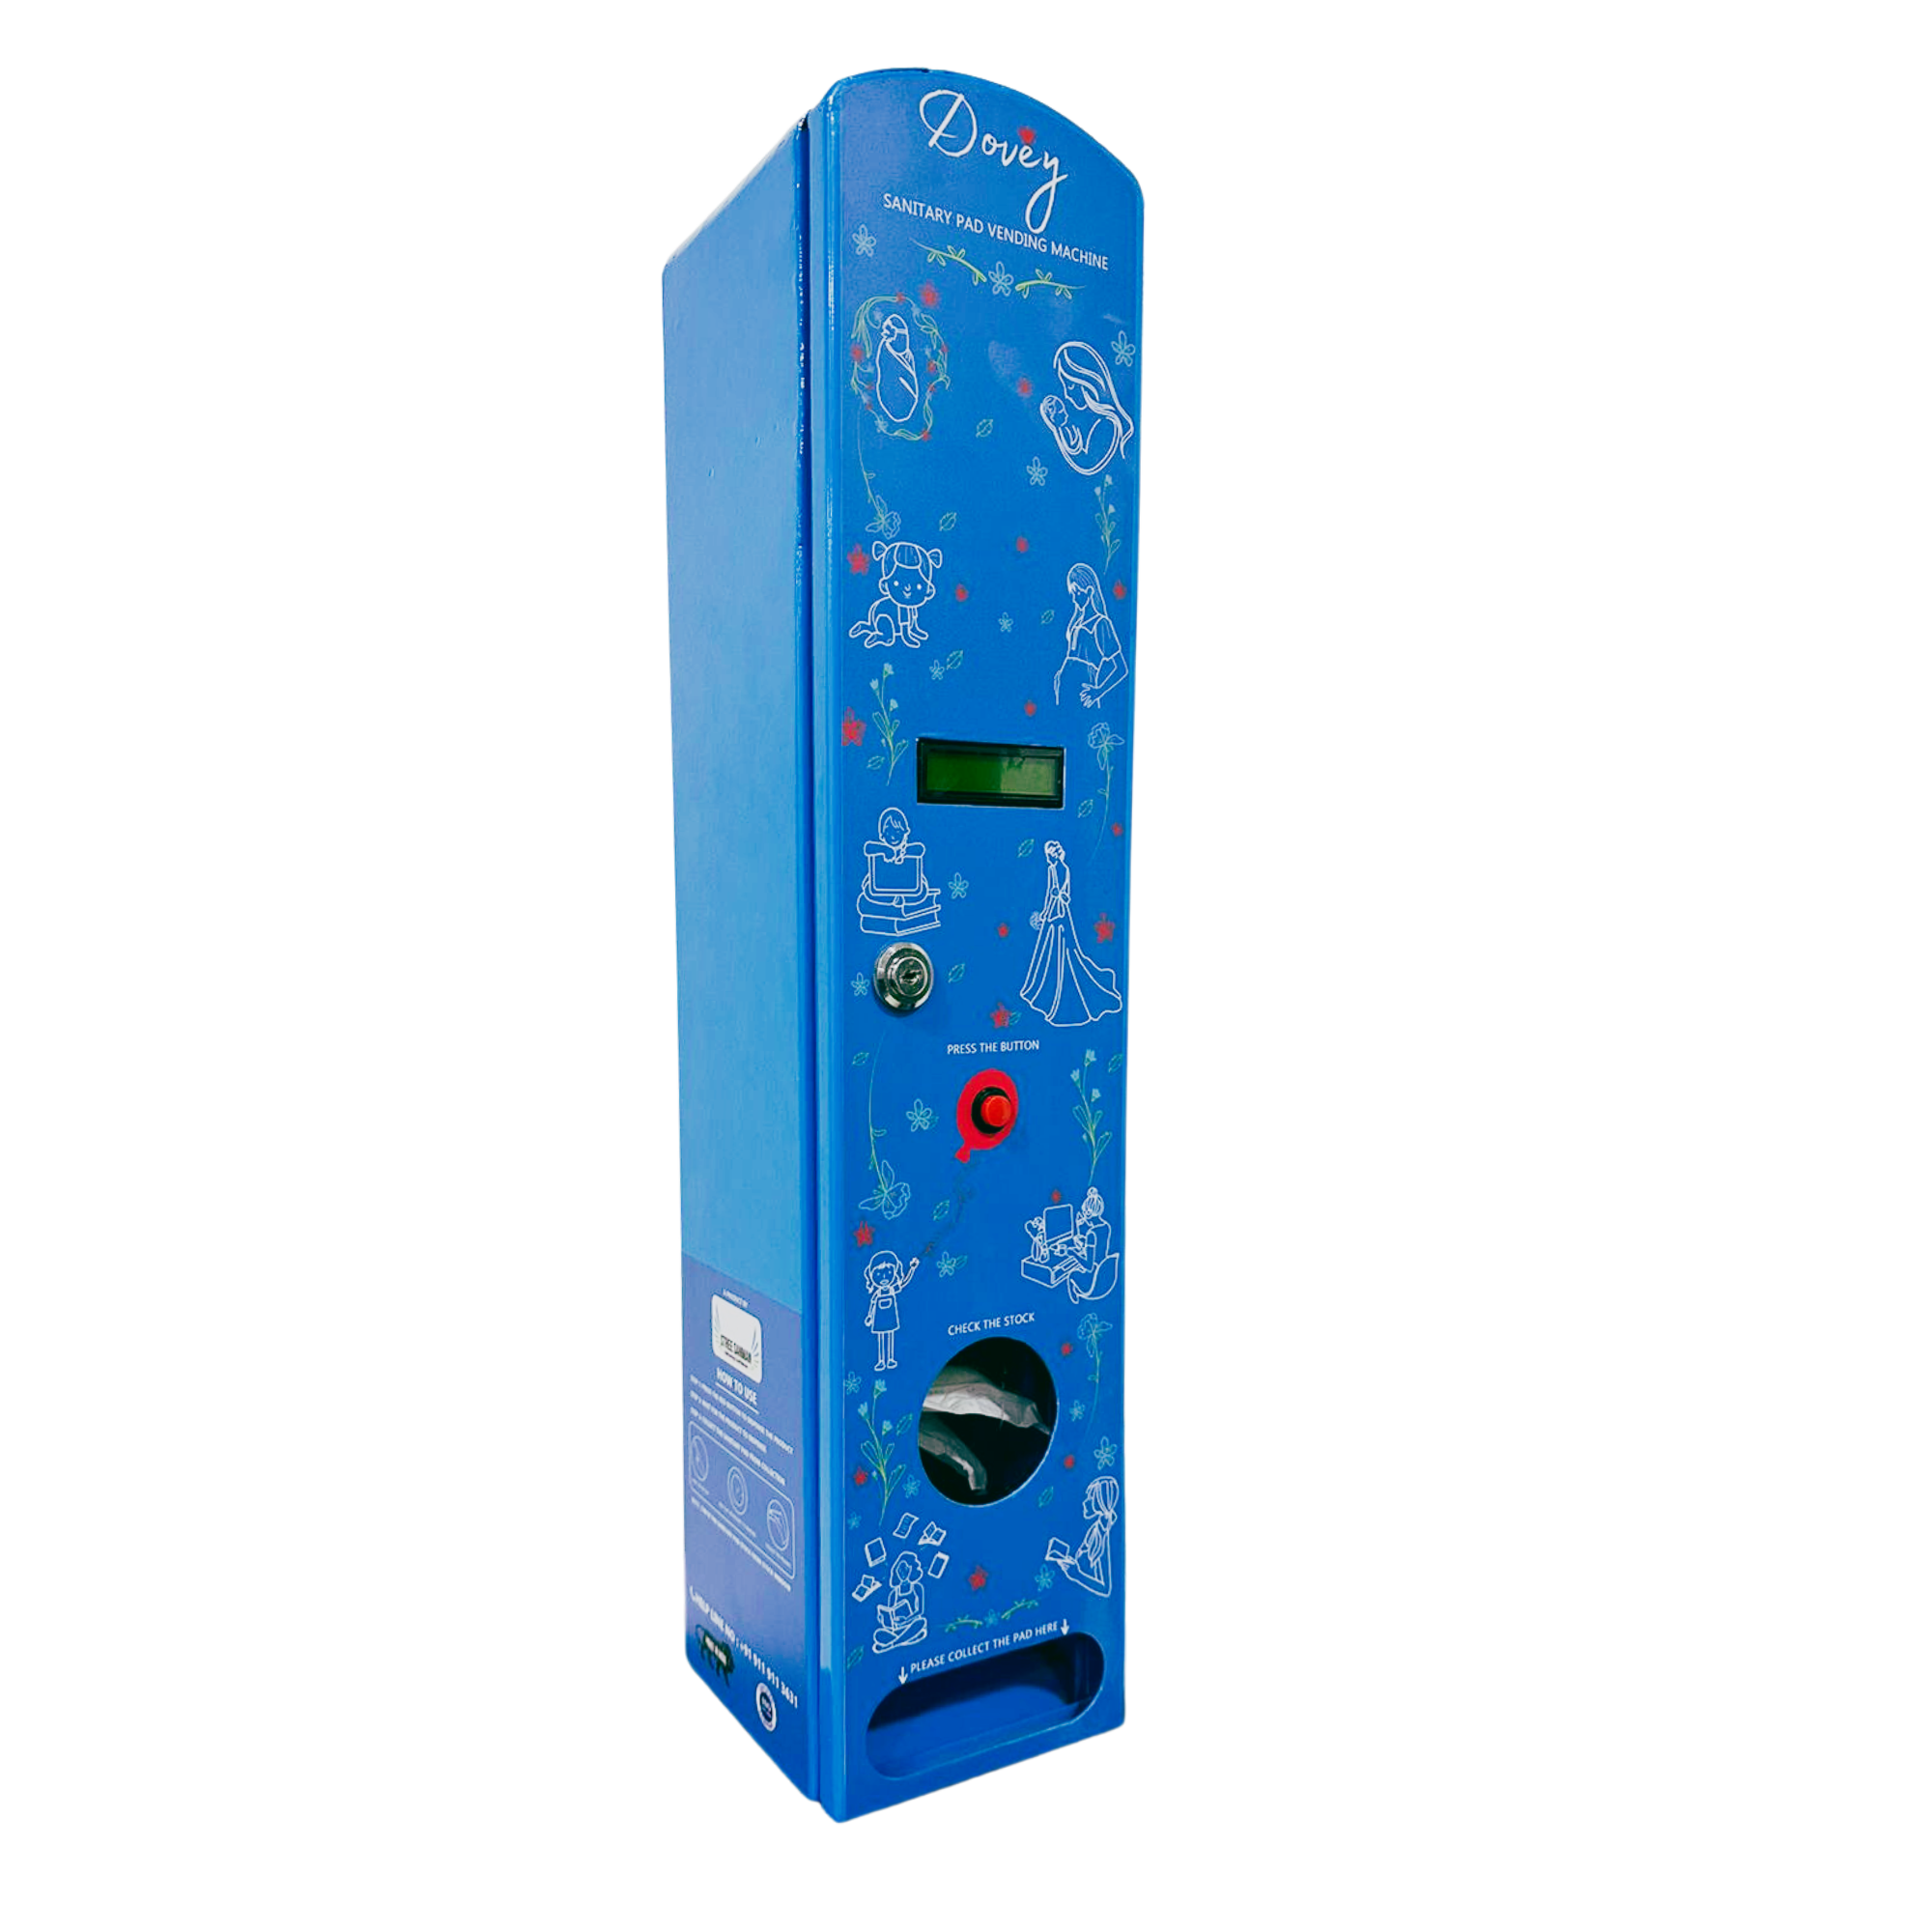 Dovey Sanitary Napkin Vending Machine (25 PAD)